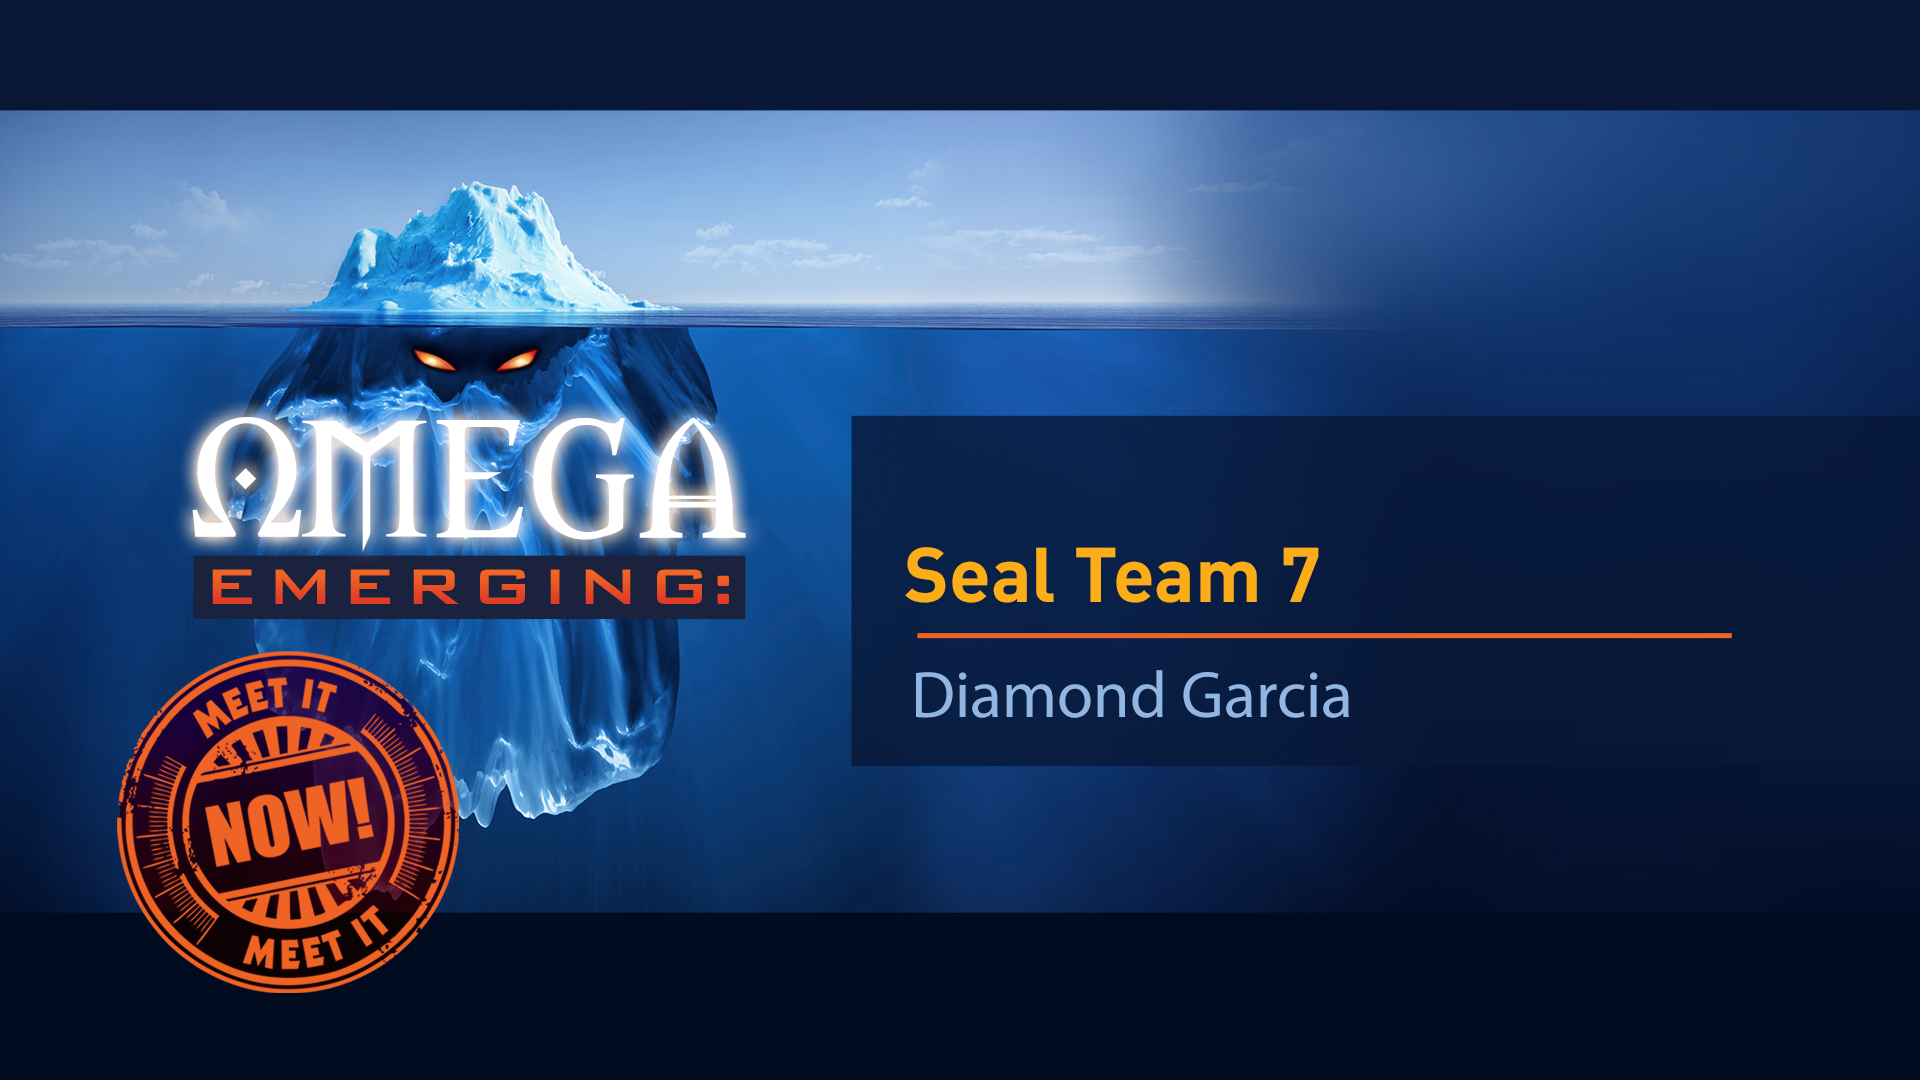 3. Seal Team 7 - Diamond Garcia